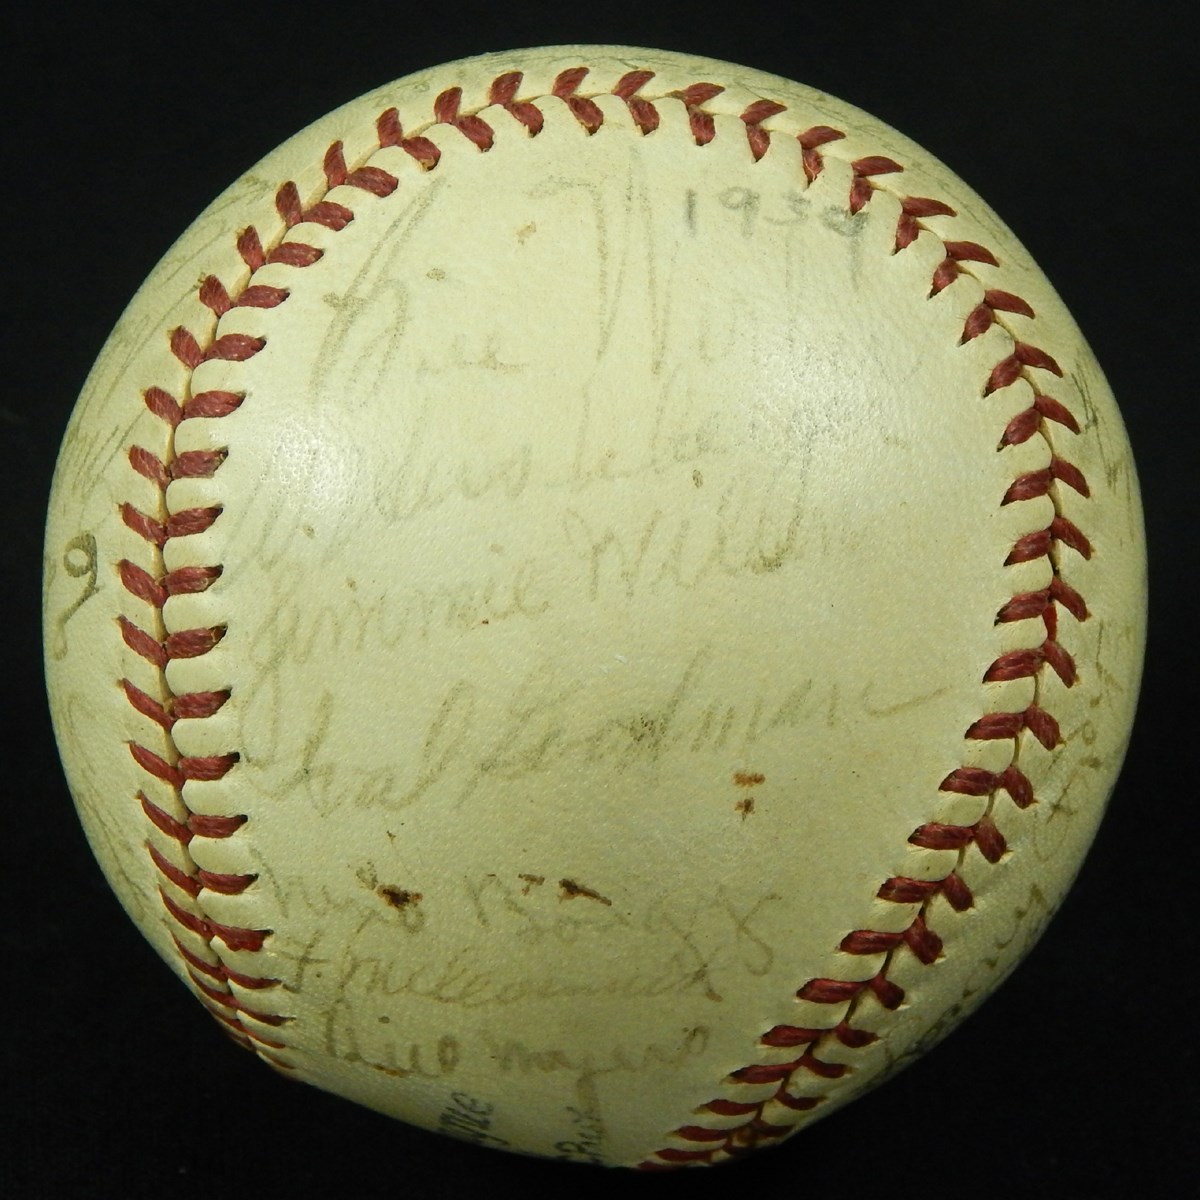 Baseball Autographs - 1939 Cincinnati Reds National League Champions Team Signed Baseball